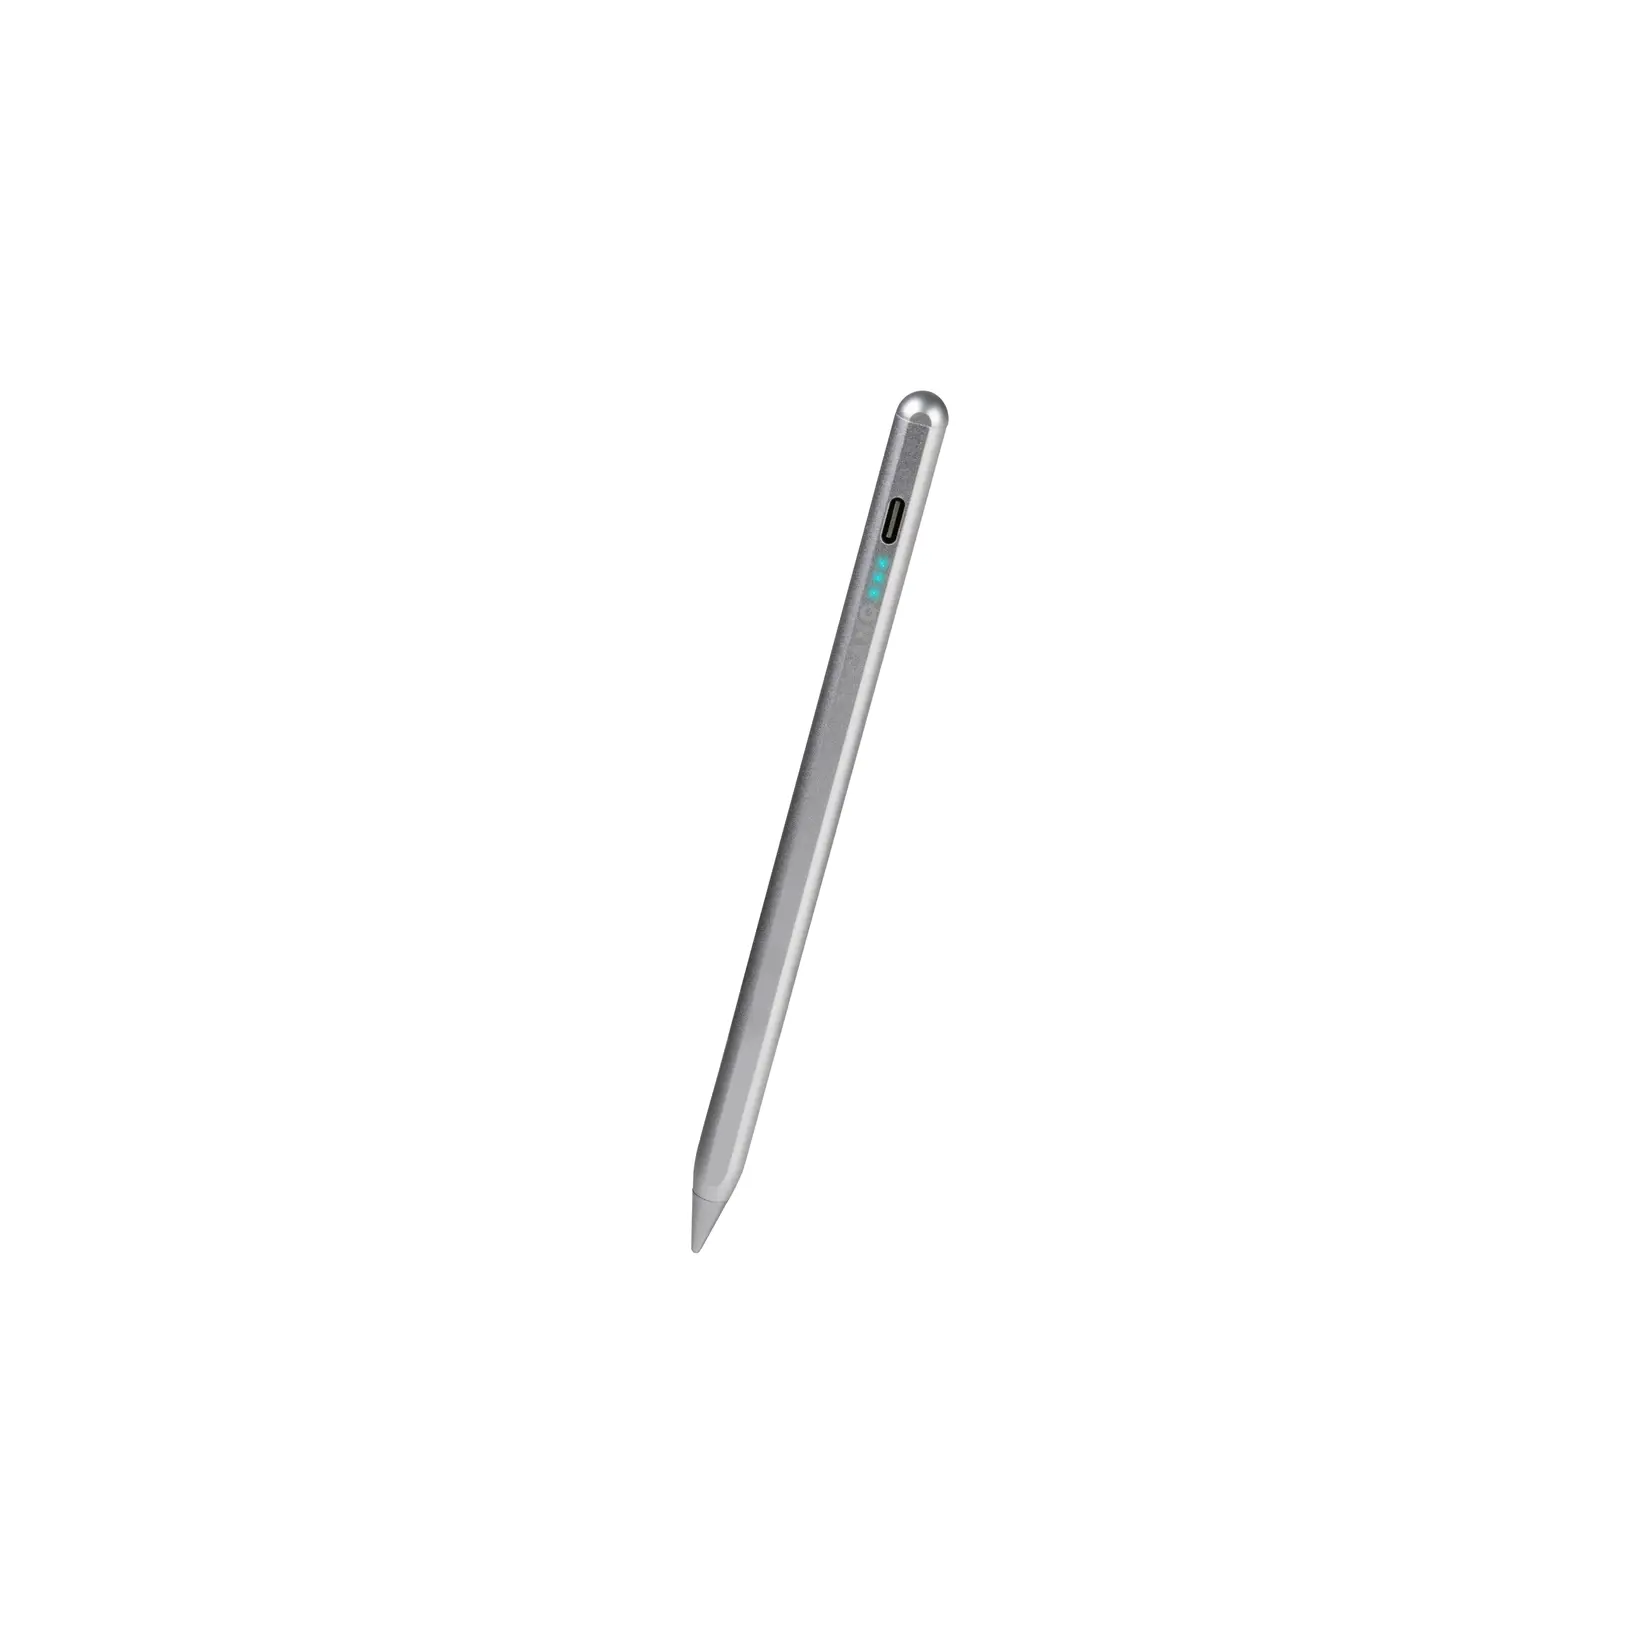 Tucano - Active capacitive stylus for iPad Tucano Colors Silver